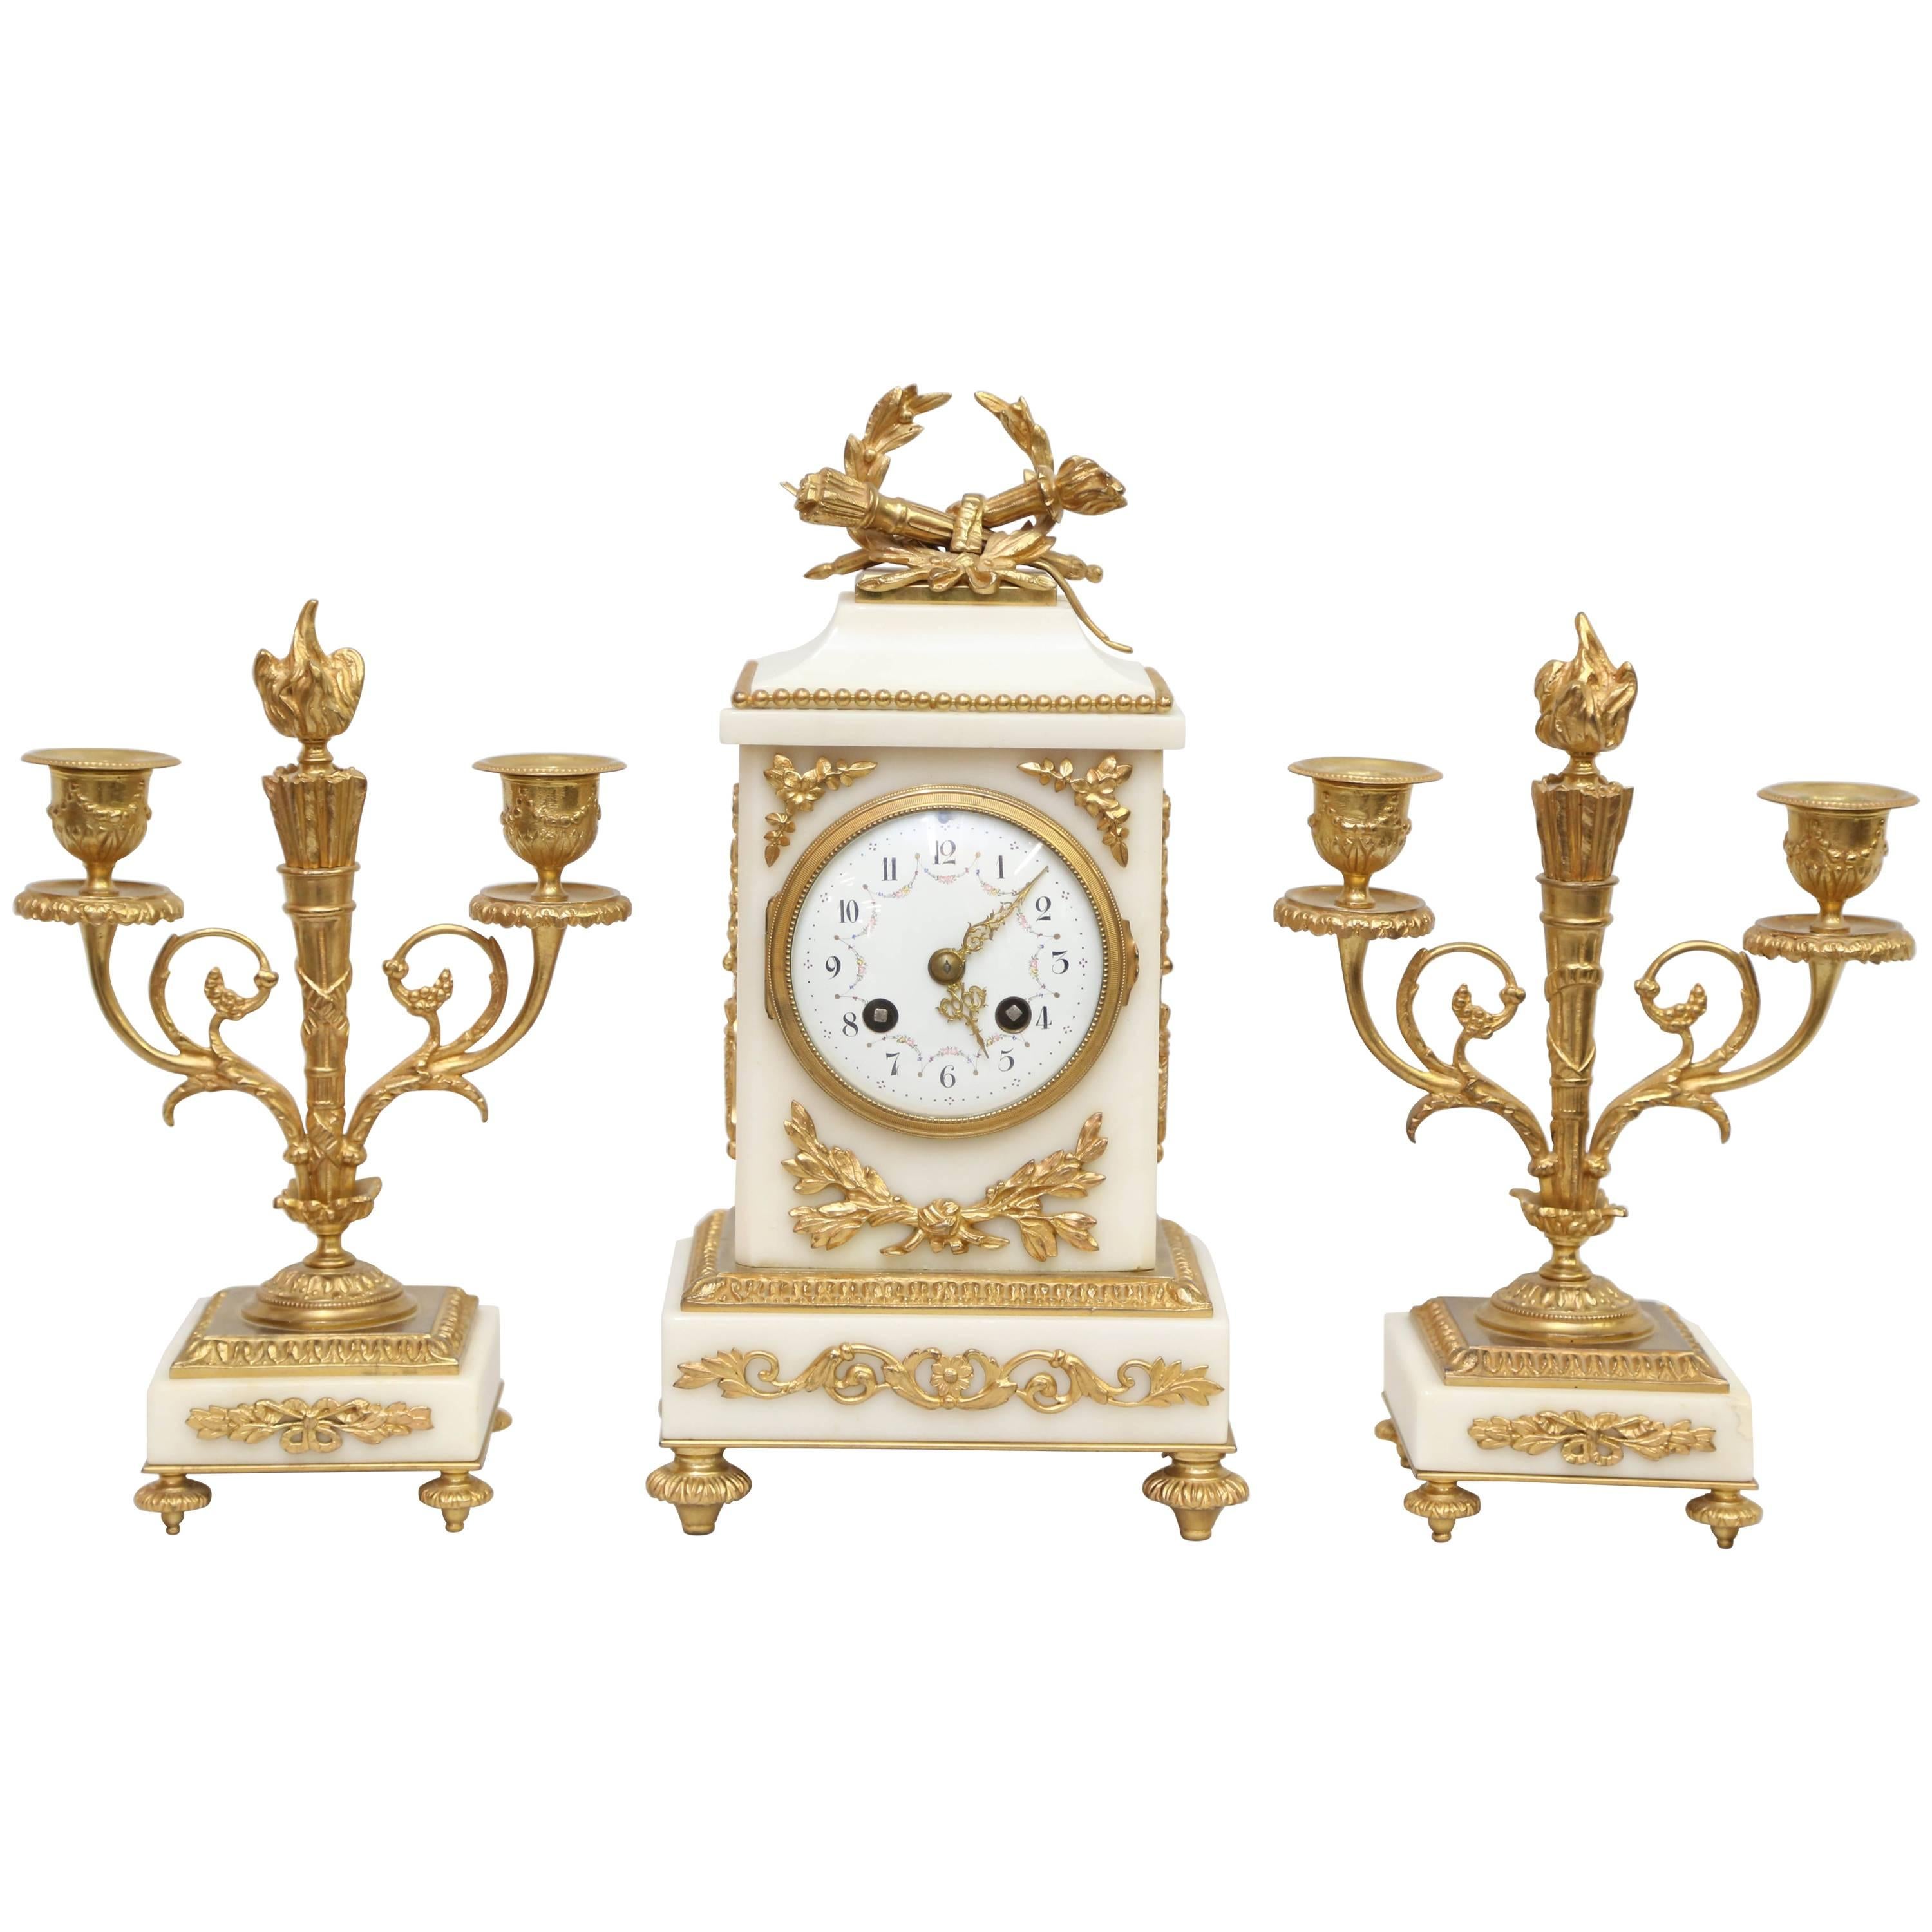 Three-Piece Louis XVI Style Ormolu and Marble Clock Garniture by Samuel Marti